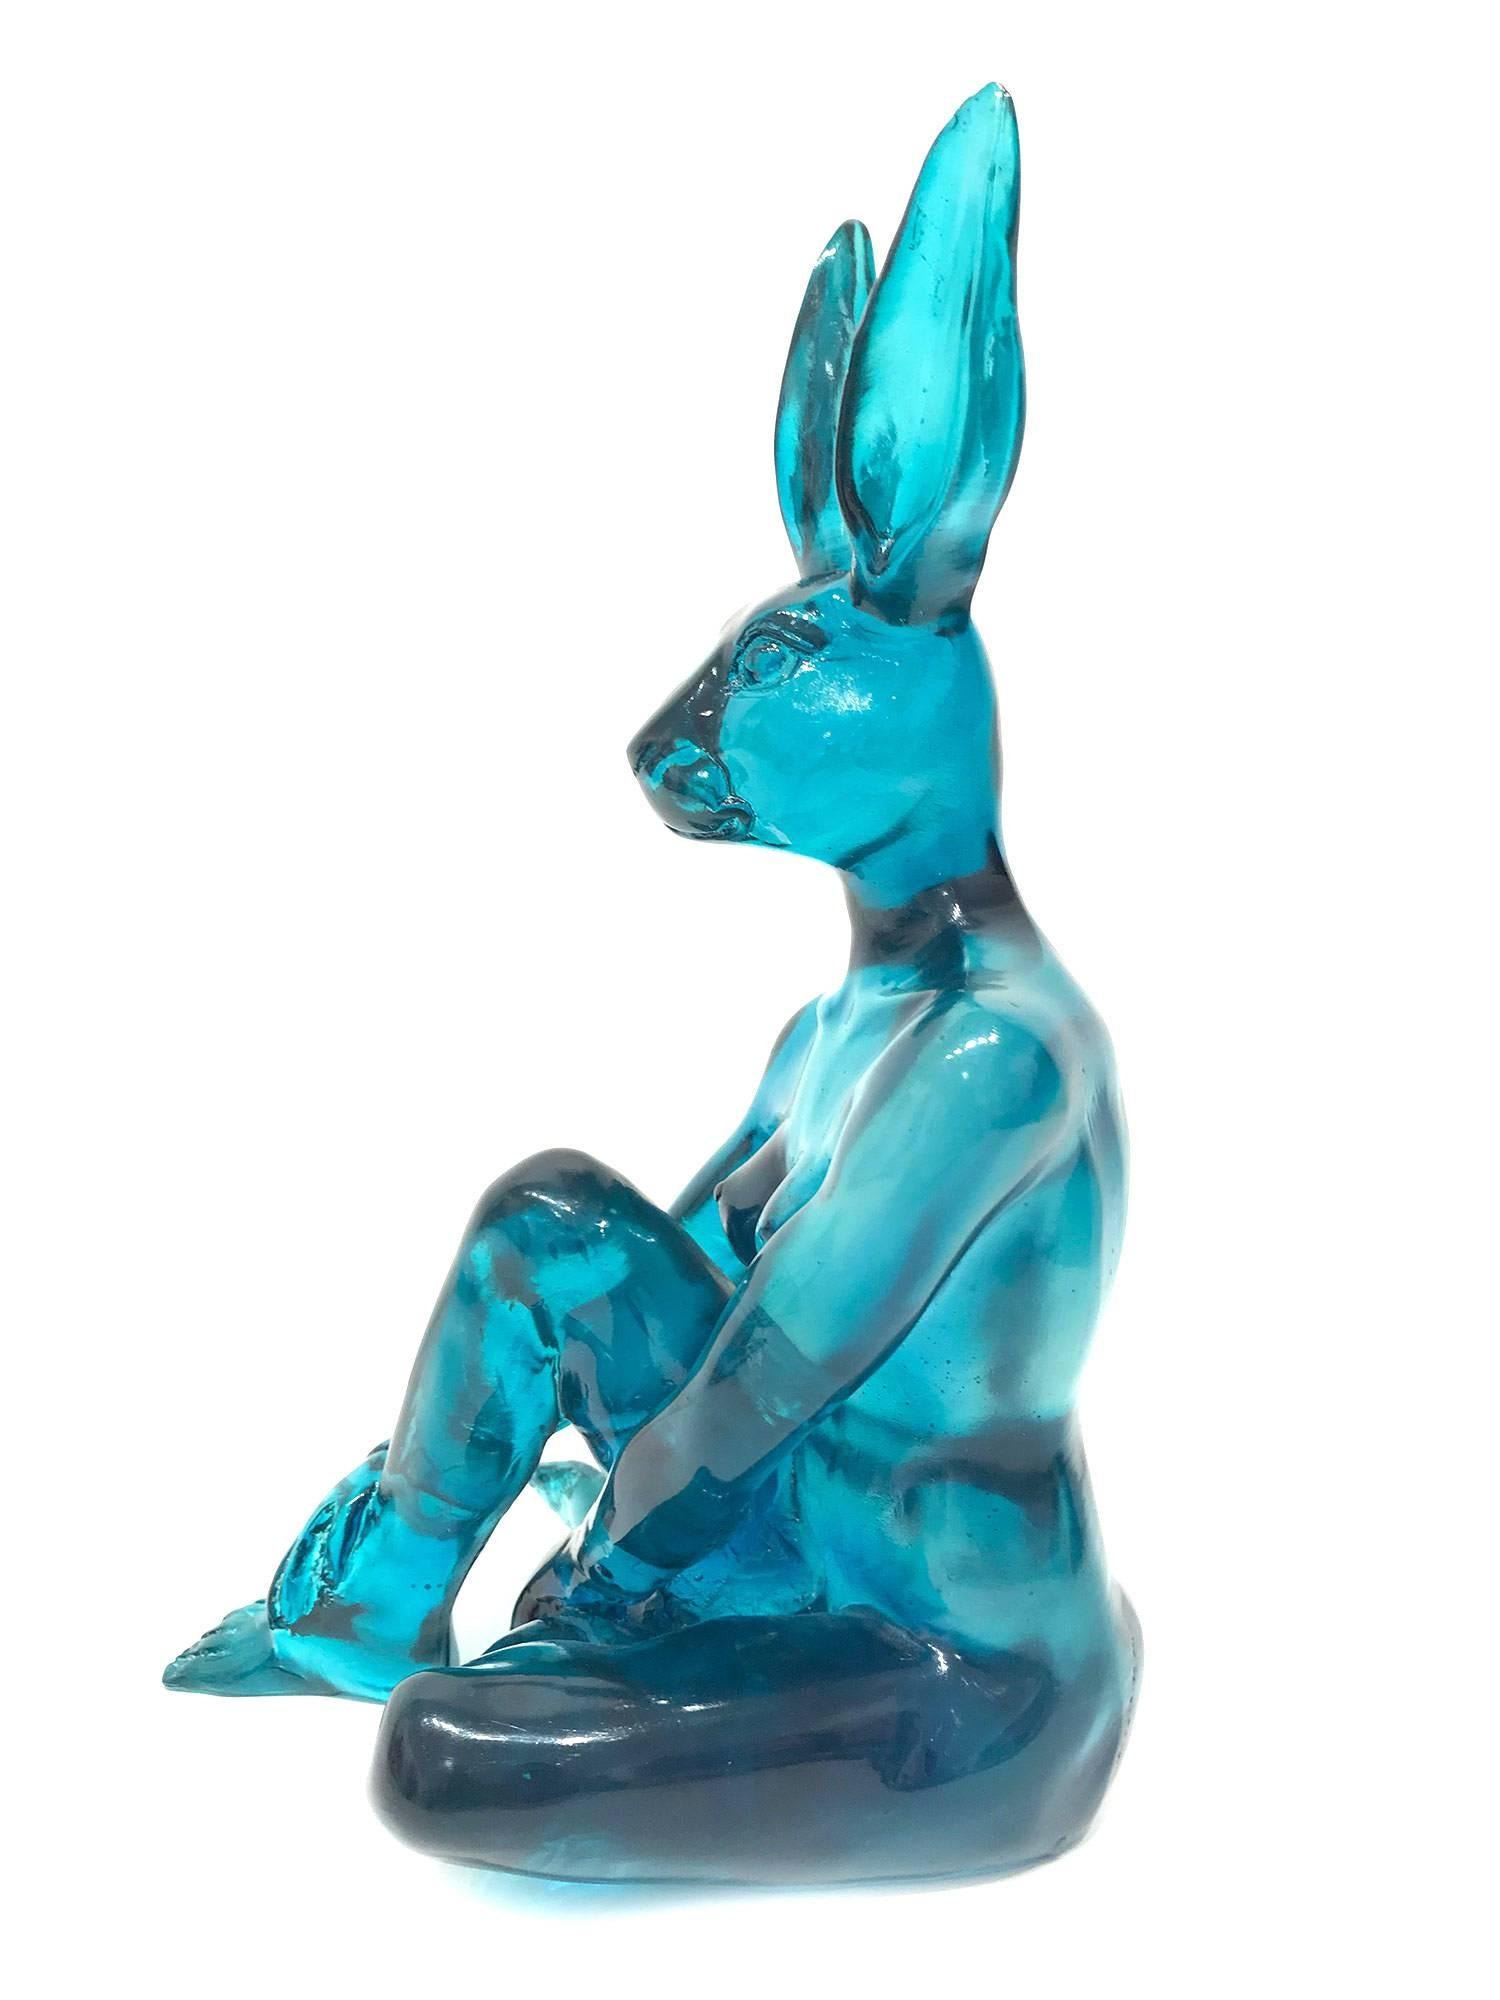 Mini Lolly Rabbitgirl (Blue) - Pop Art Sculpture by Gillie and Marc Schattner